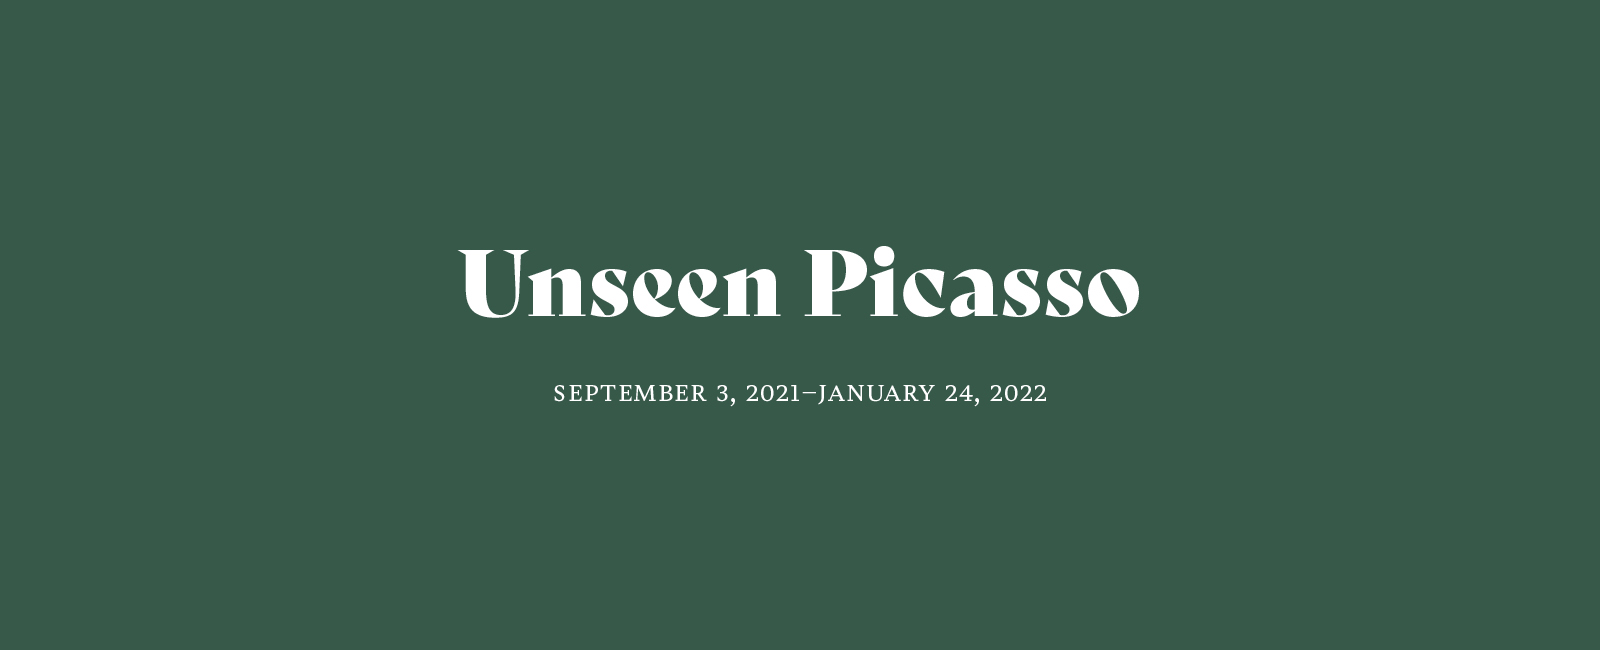 Unseen Picasso exhibition banner